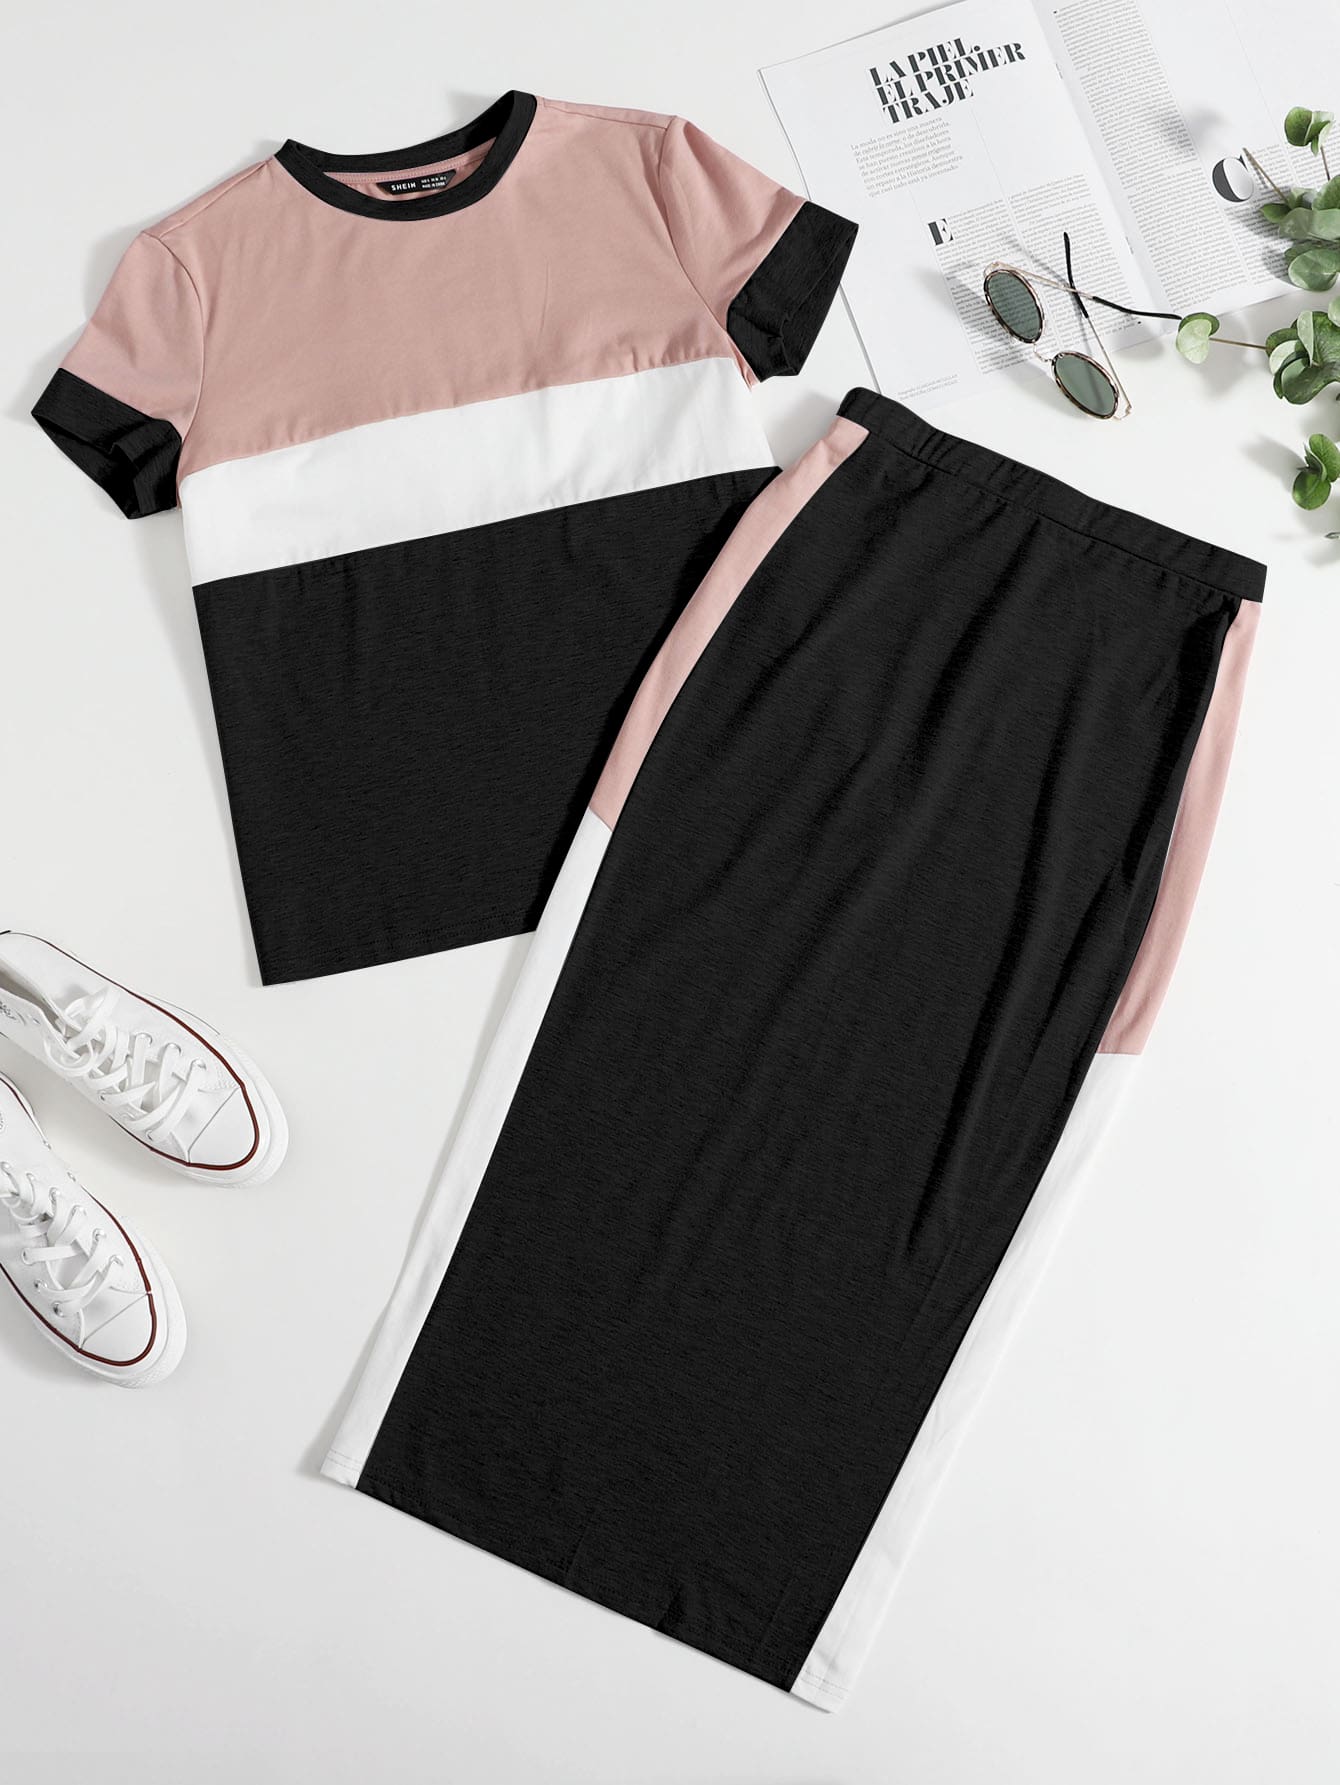 Colour Block Top & Skirt _ White Black Pink